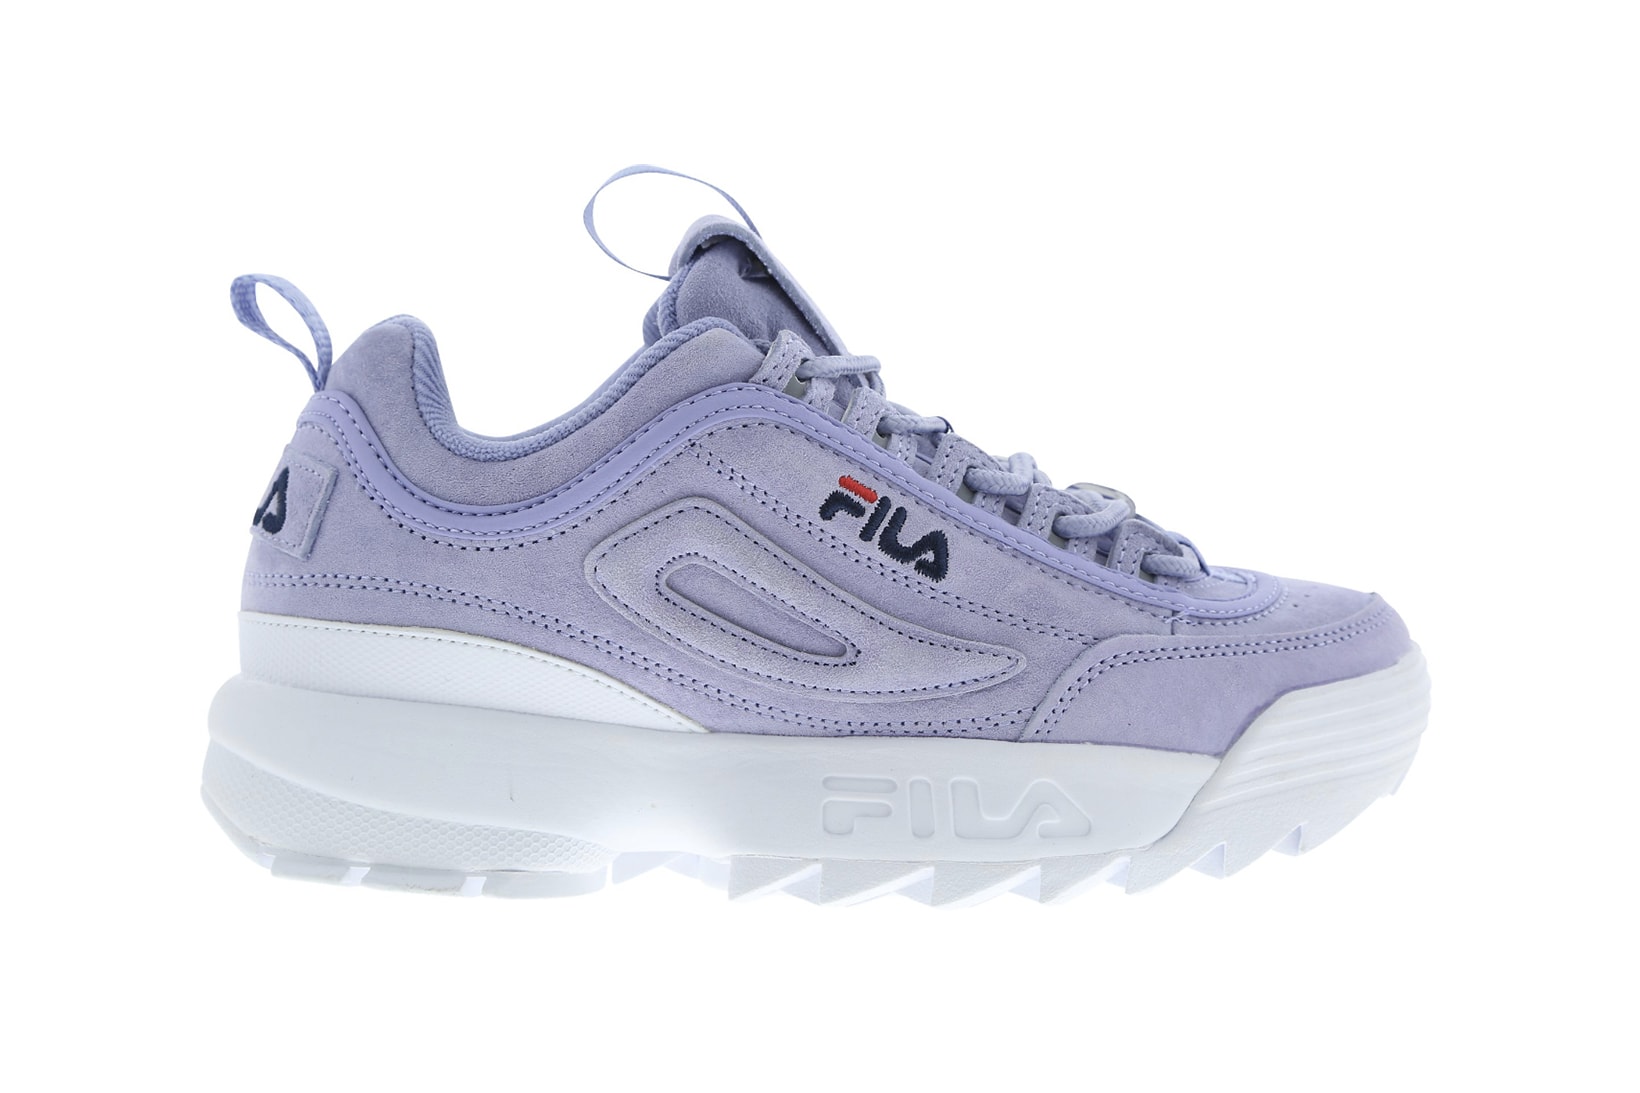 FILA ultra violet pantone 2018 disruptor 2 II sneaker sweet lavender pastel purple chunky bulky 90s dad shoe affordable where to buy Foot Locker